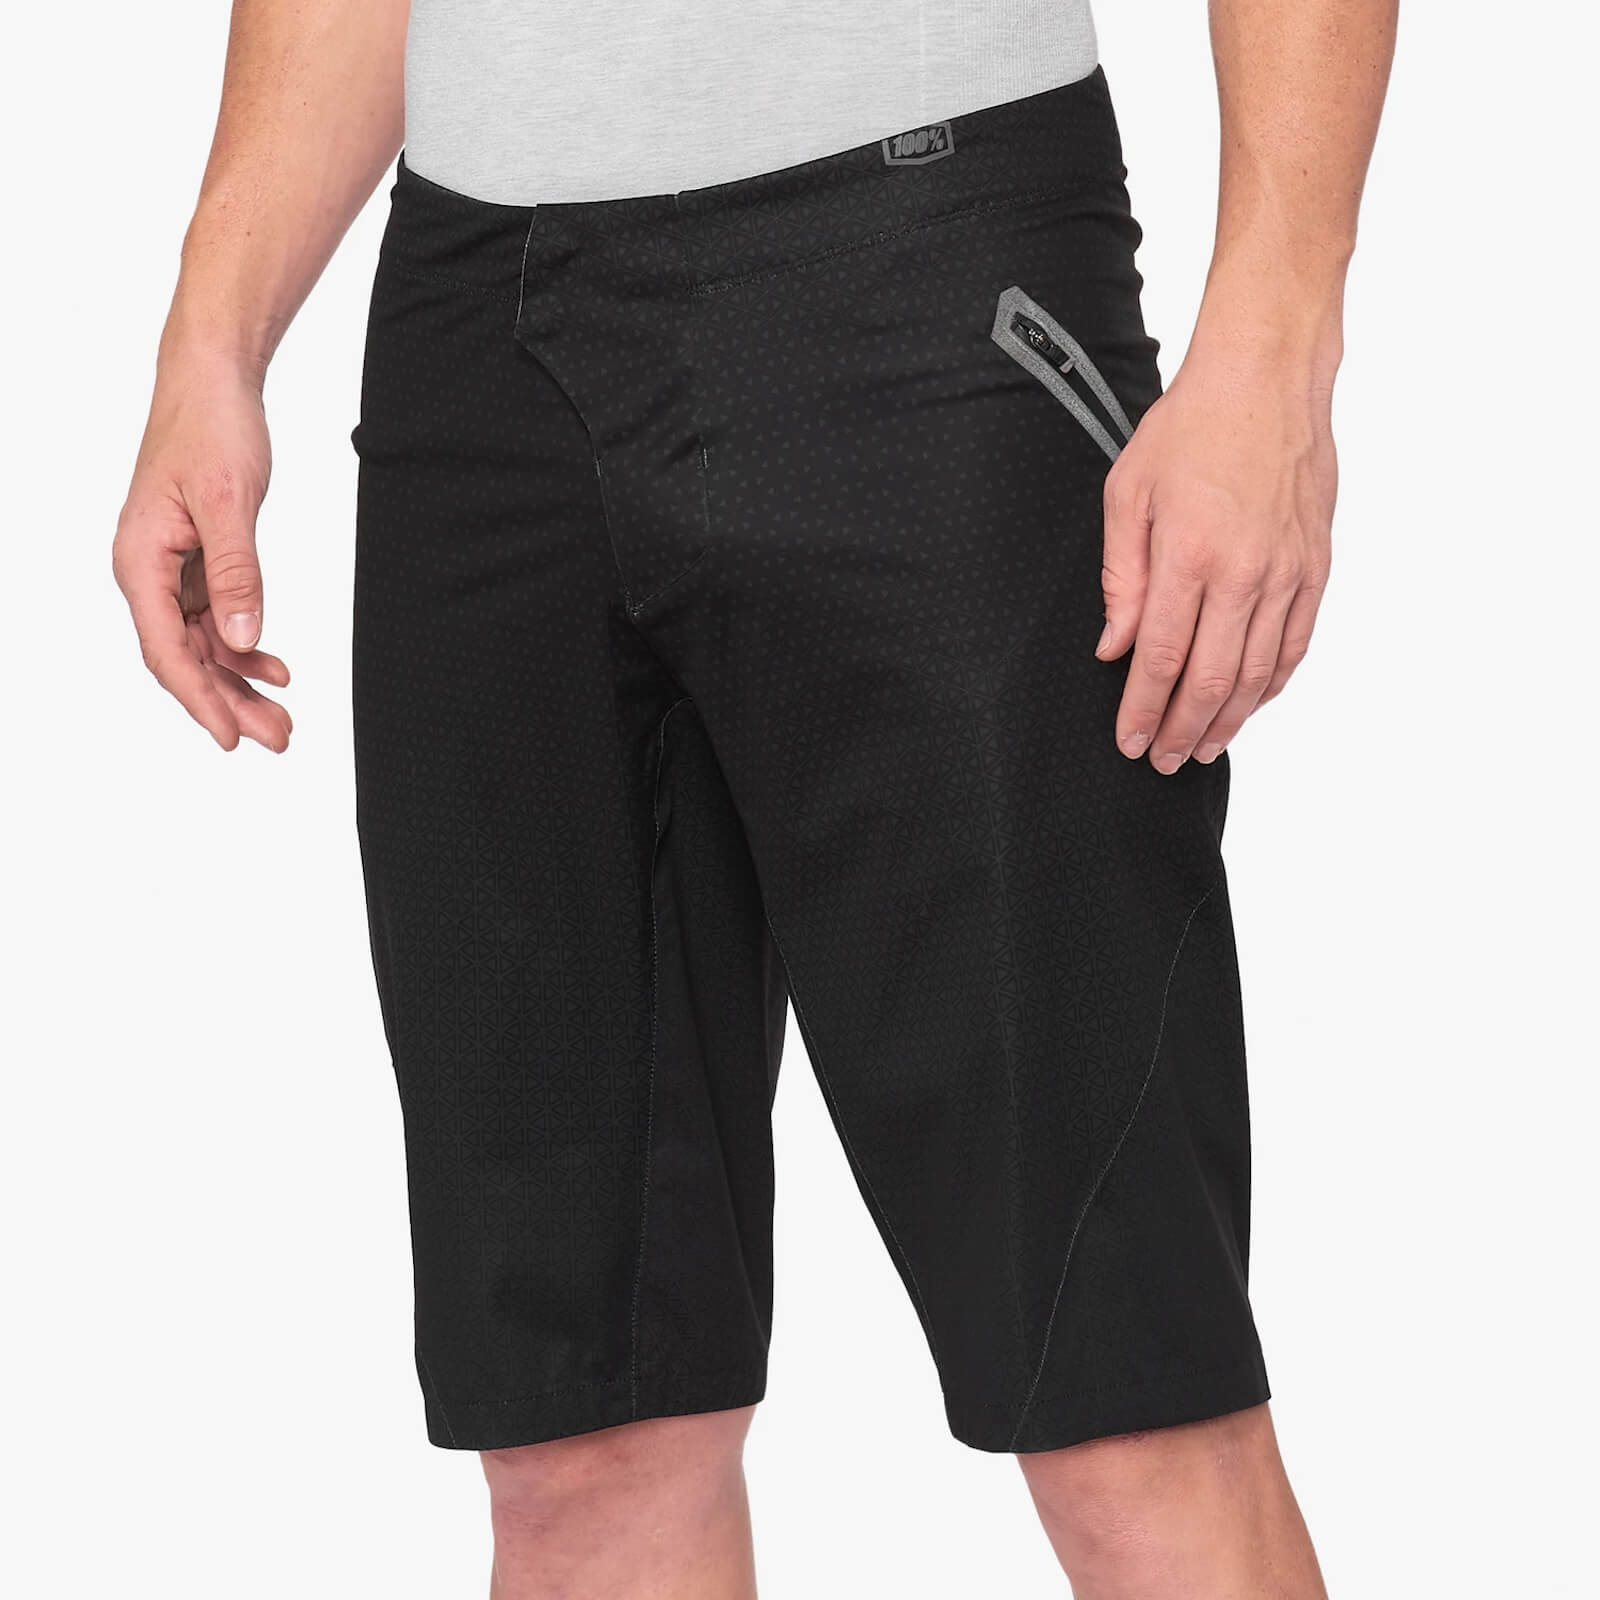 100% Hydromatic MTB Shorts - 34